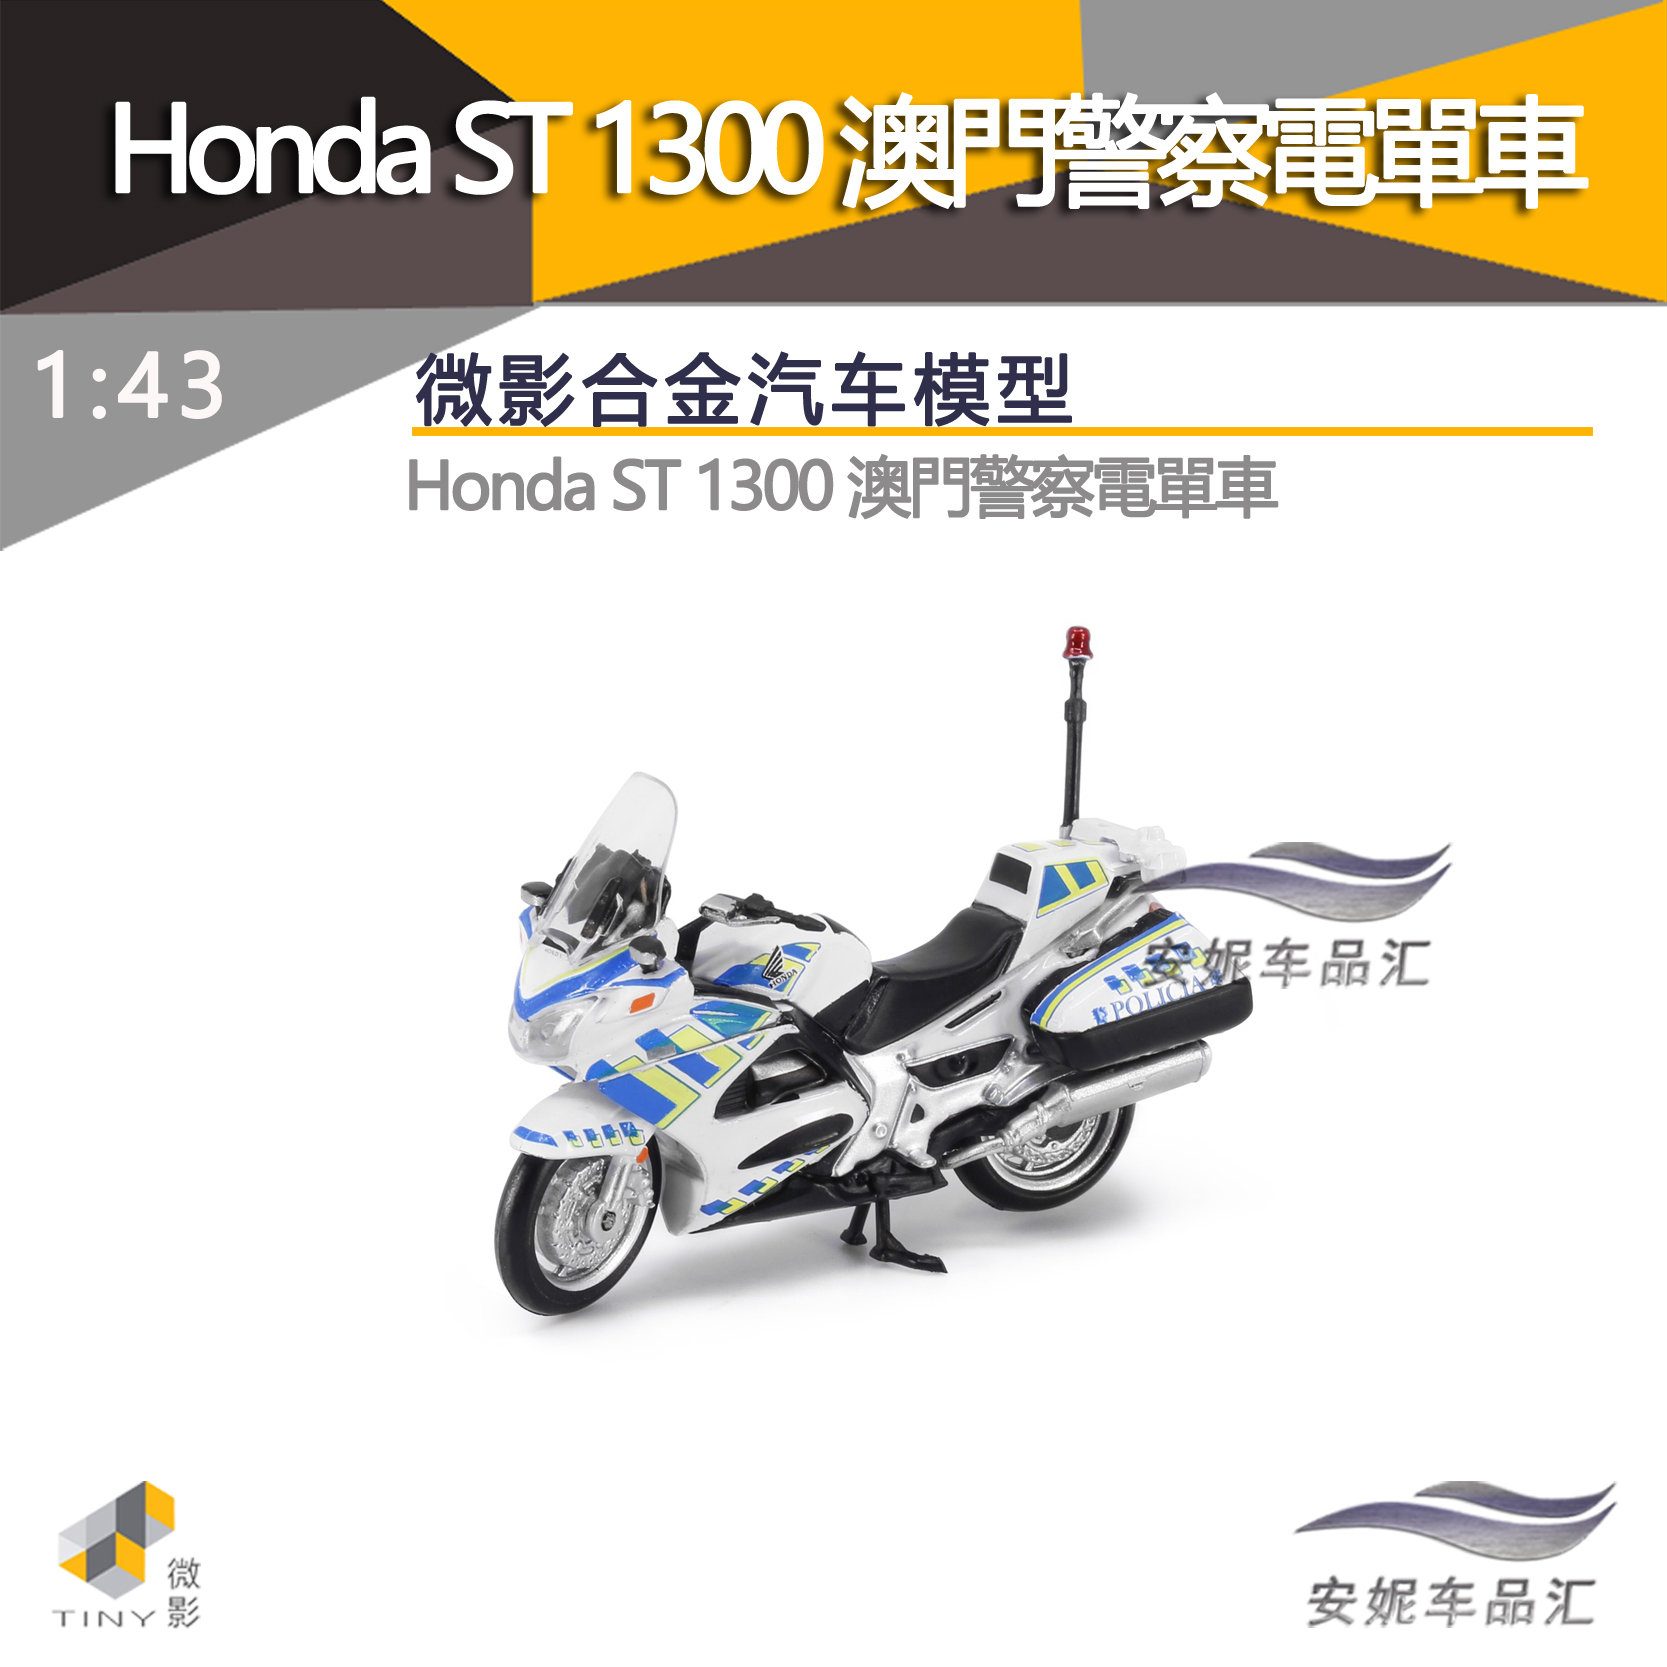 Tiny 微影1/43城市MC Honda ST 1300 澳門警察电单摩托车模玩具成